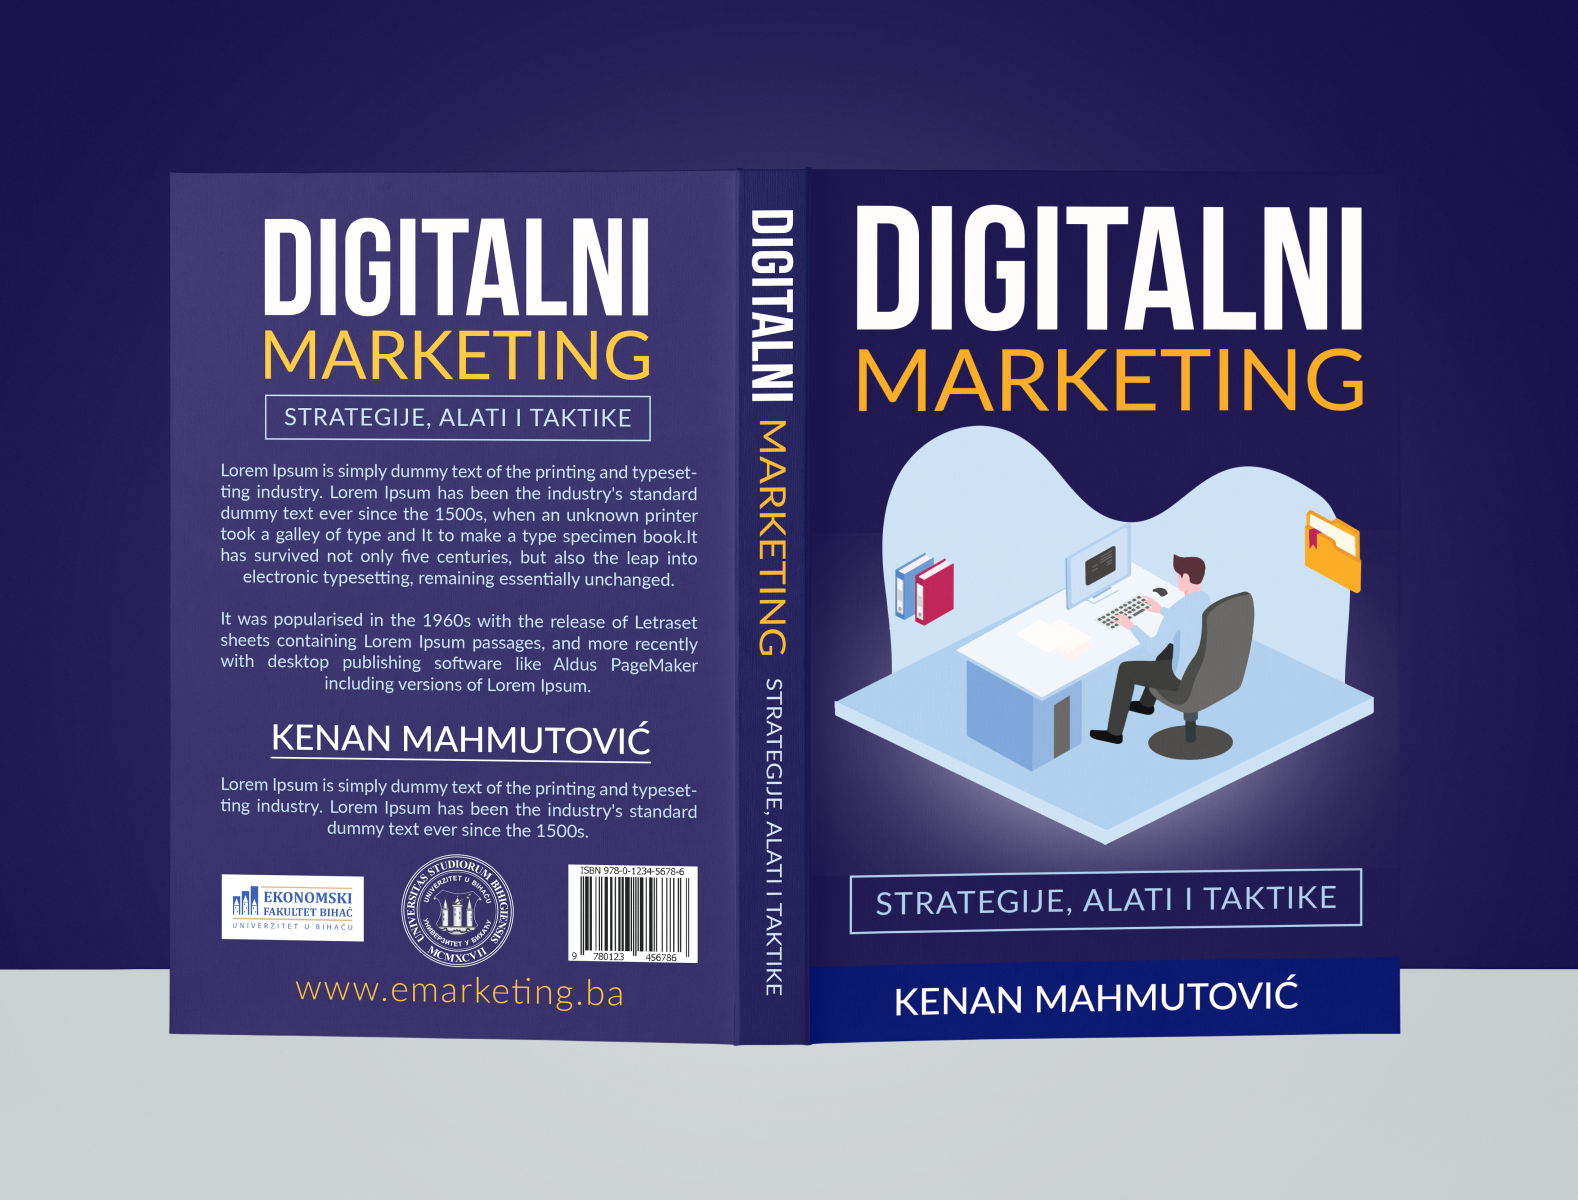 Digitalni Marketing Book Cover Design By Ajit Sen On Dribbble